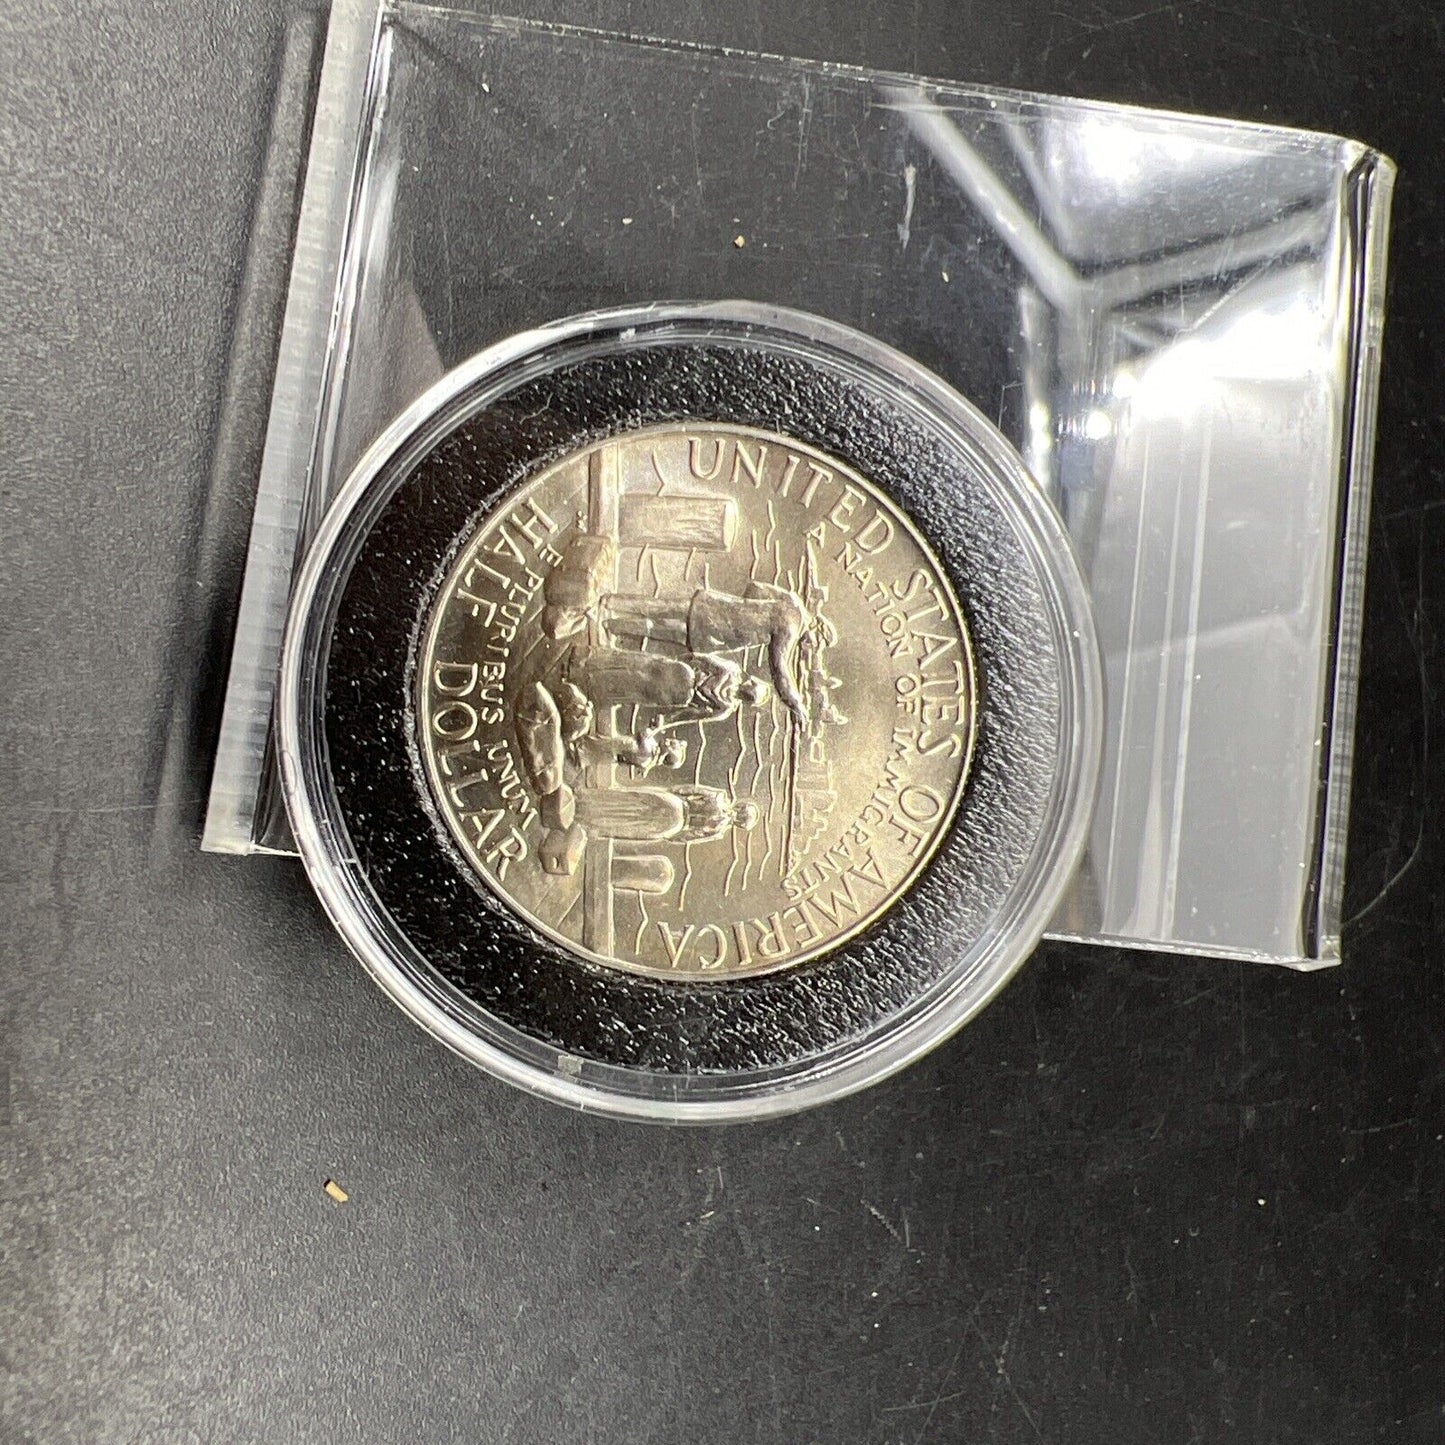 1986 D Statue of Liberty Commemorative Half Dollar Coin in Capsule GEM BU